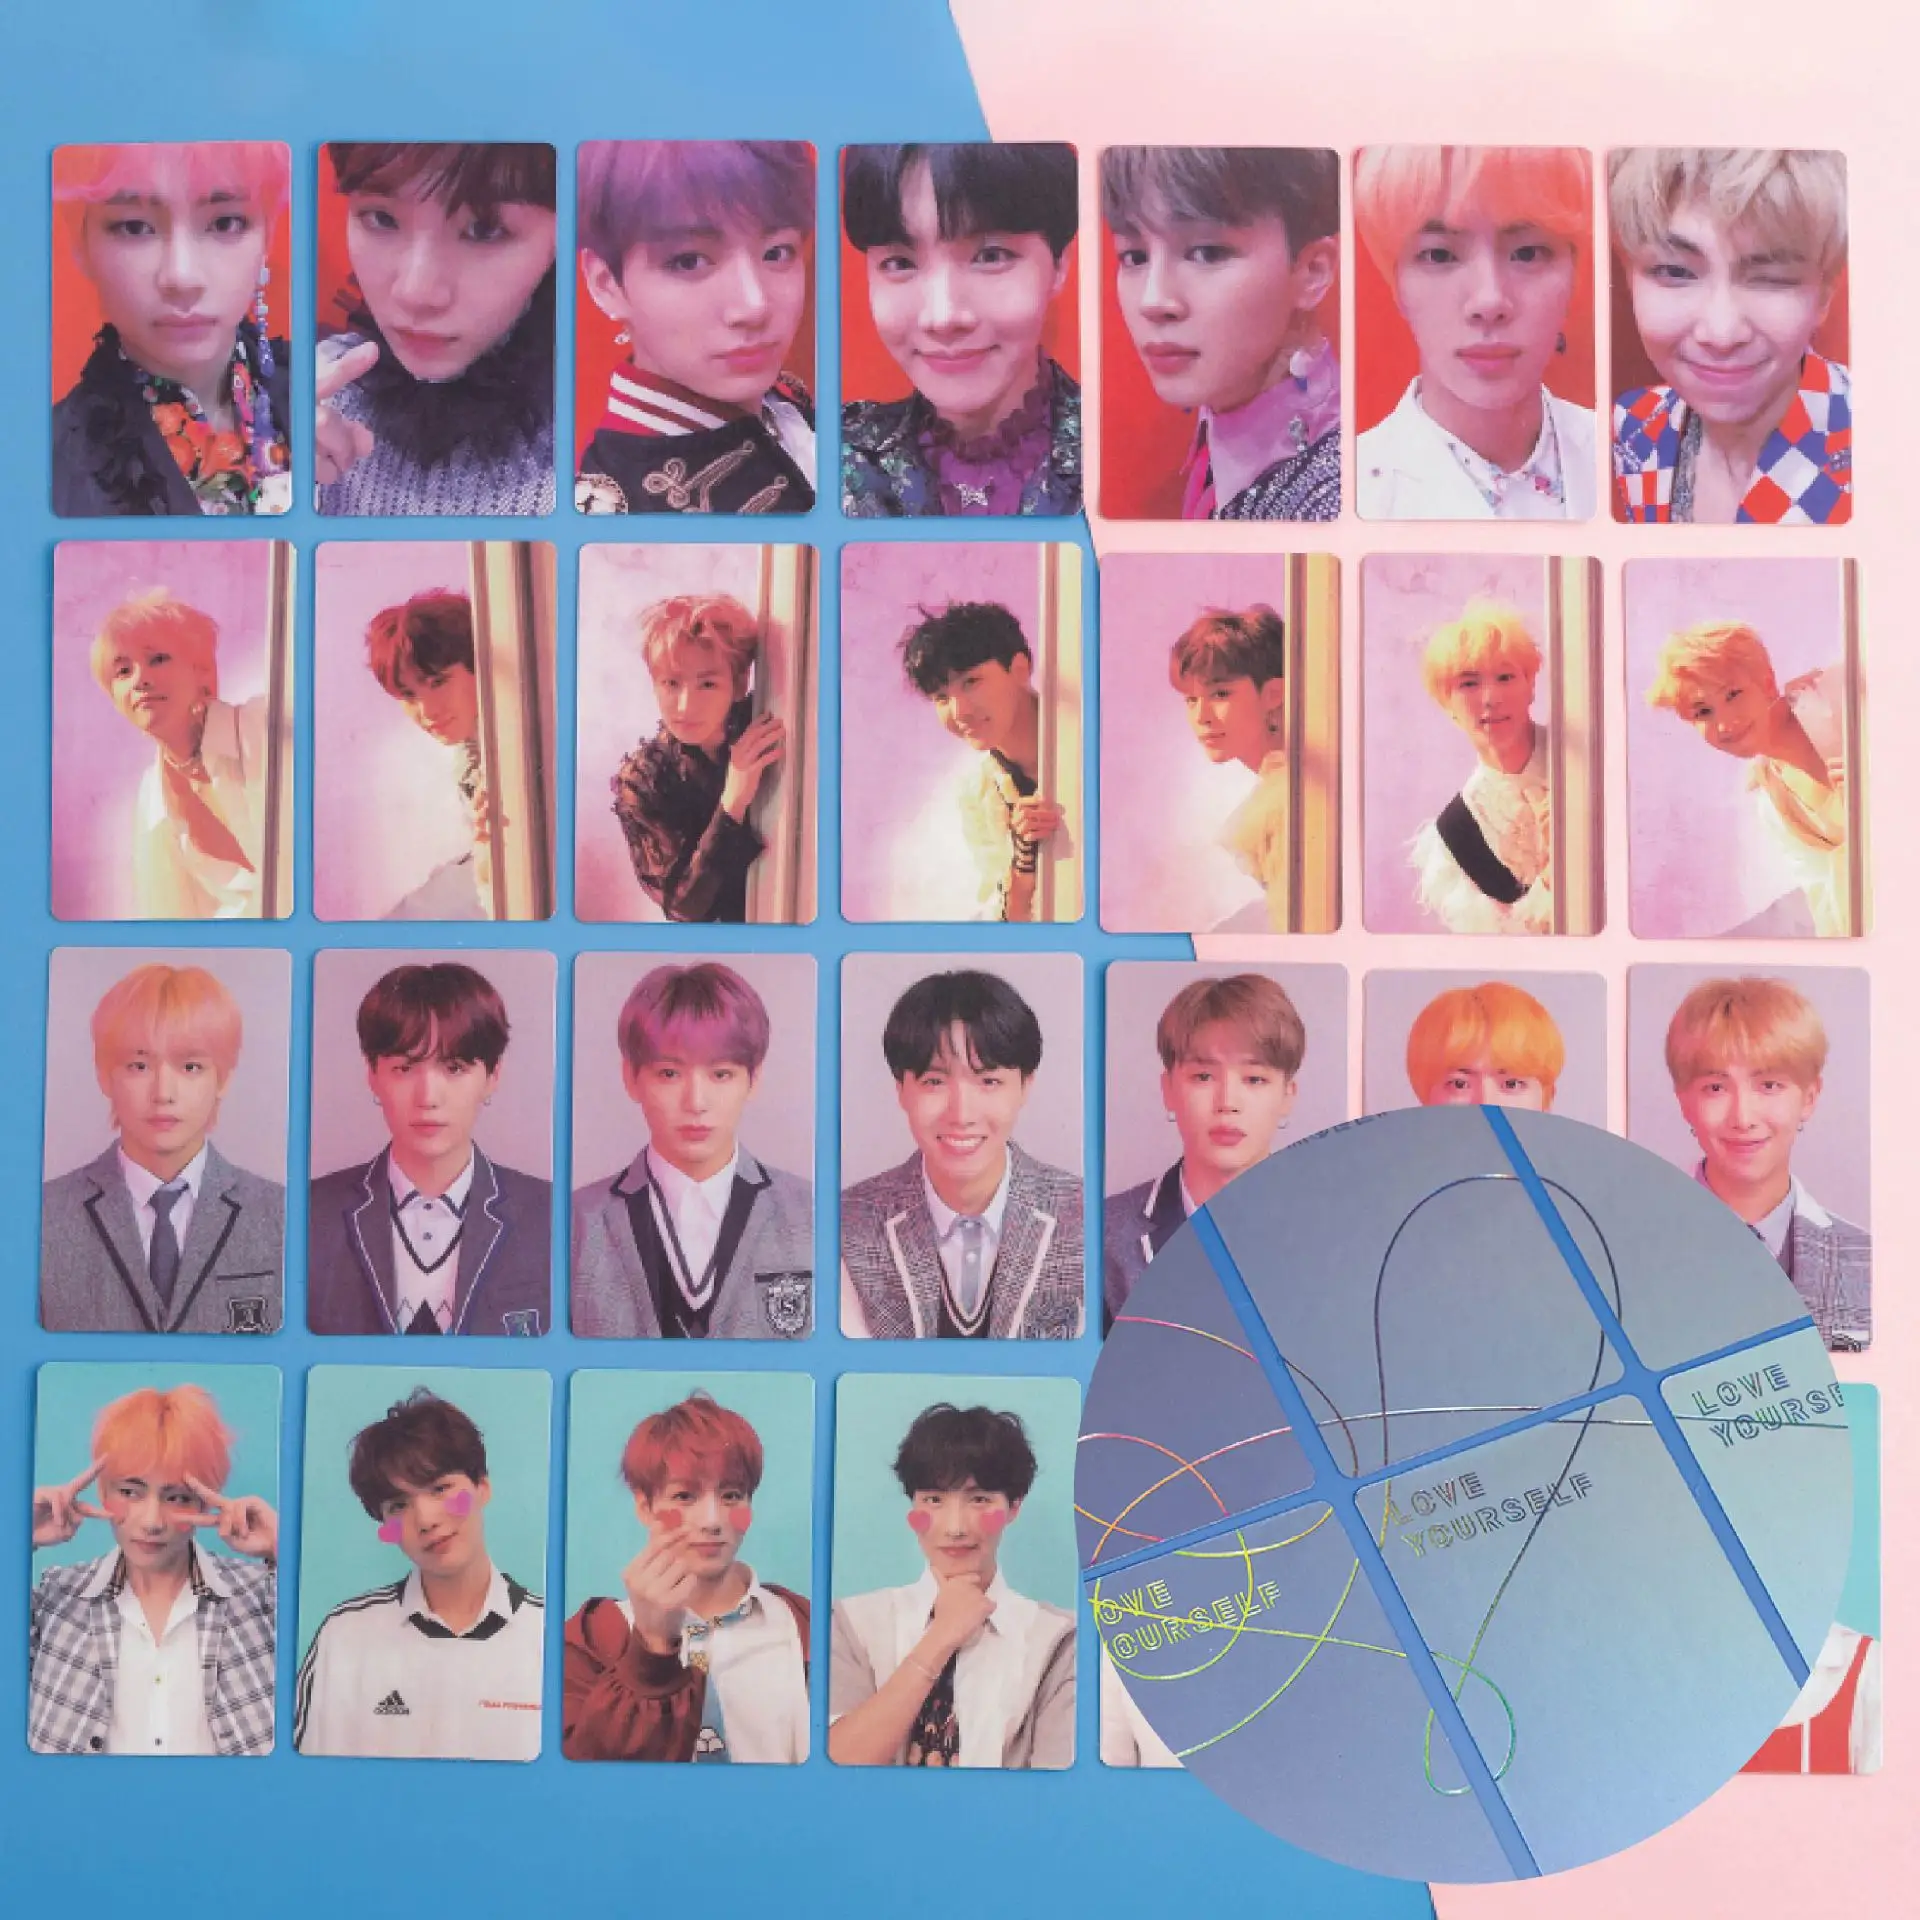 

7Pcs/Set Kpop Bangtan Boys Lomo Card New Postcard New Album Lomo Card Photo Cards Gifts Fans Collection SUGA JK JIMIN V RM JIN